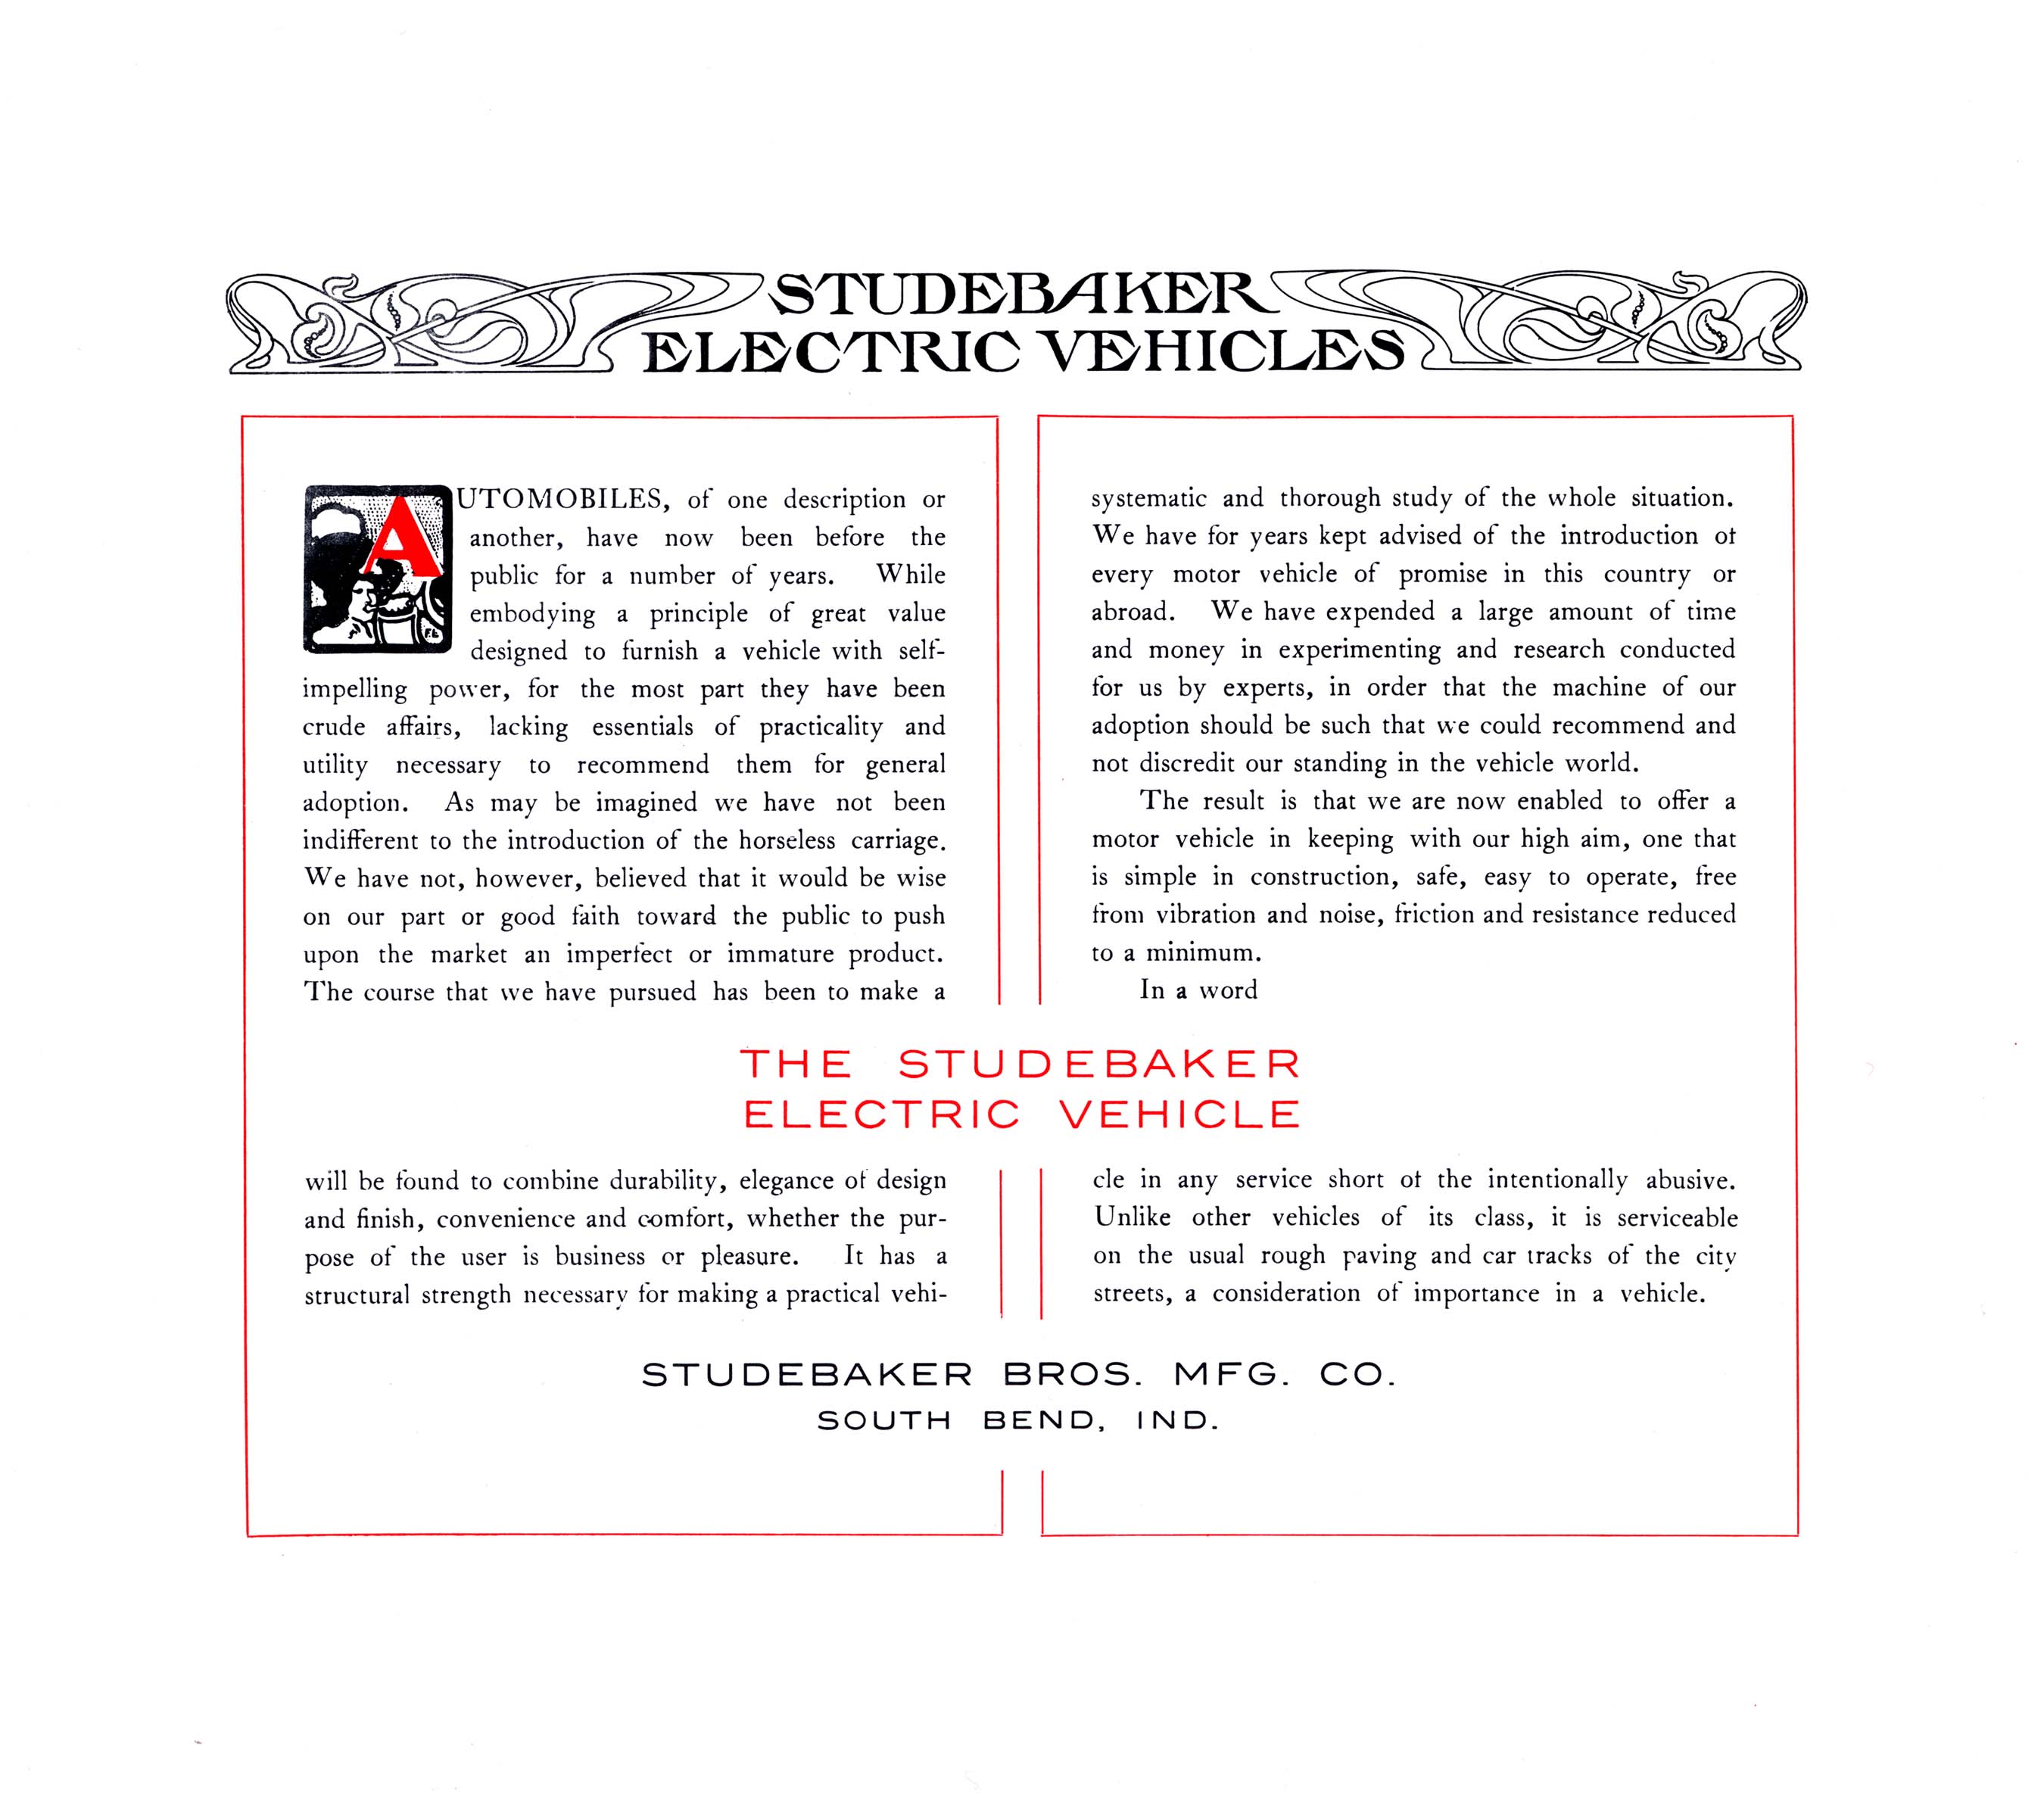 1903_Studebaker_Electric-03